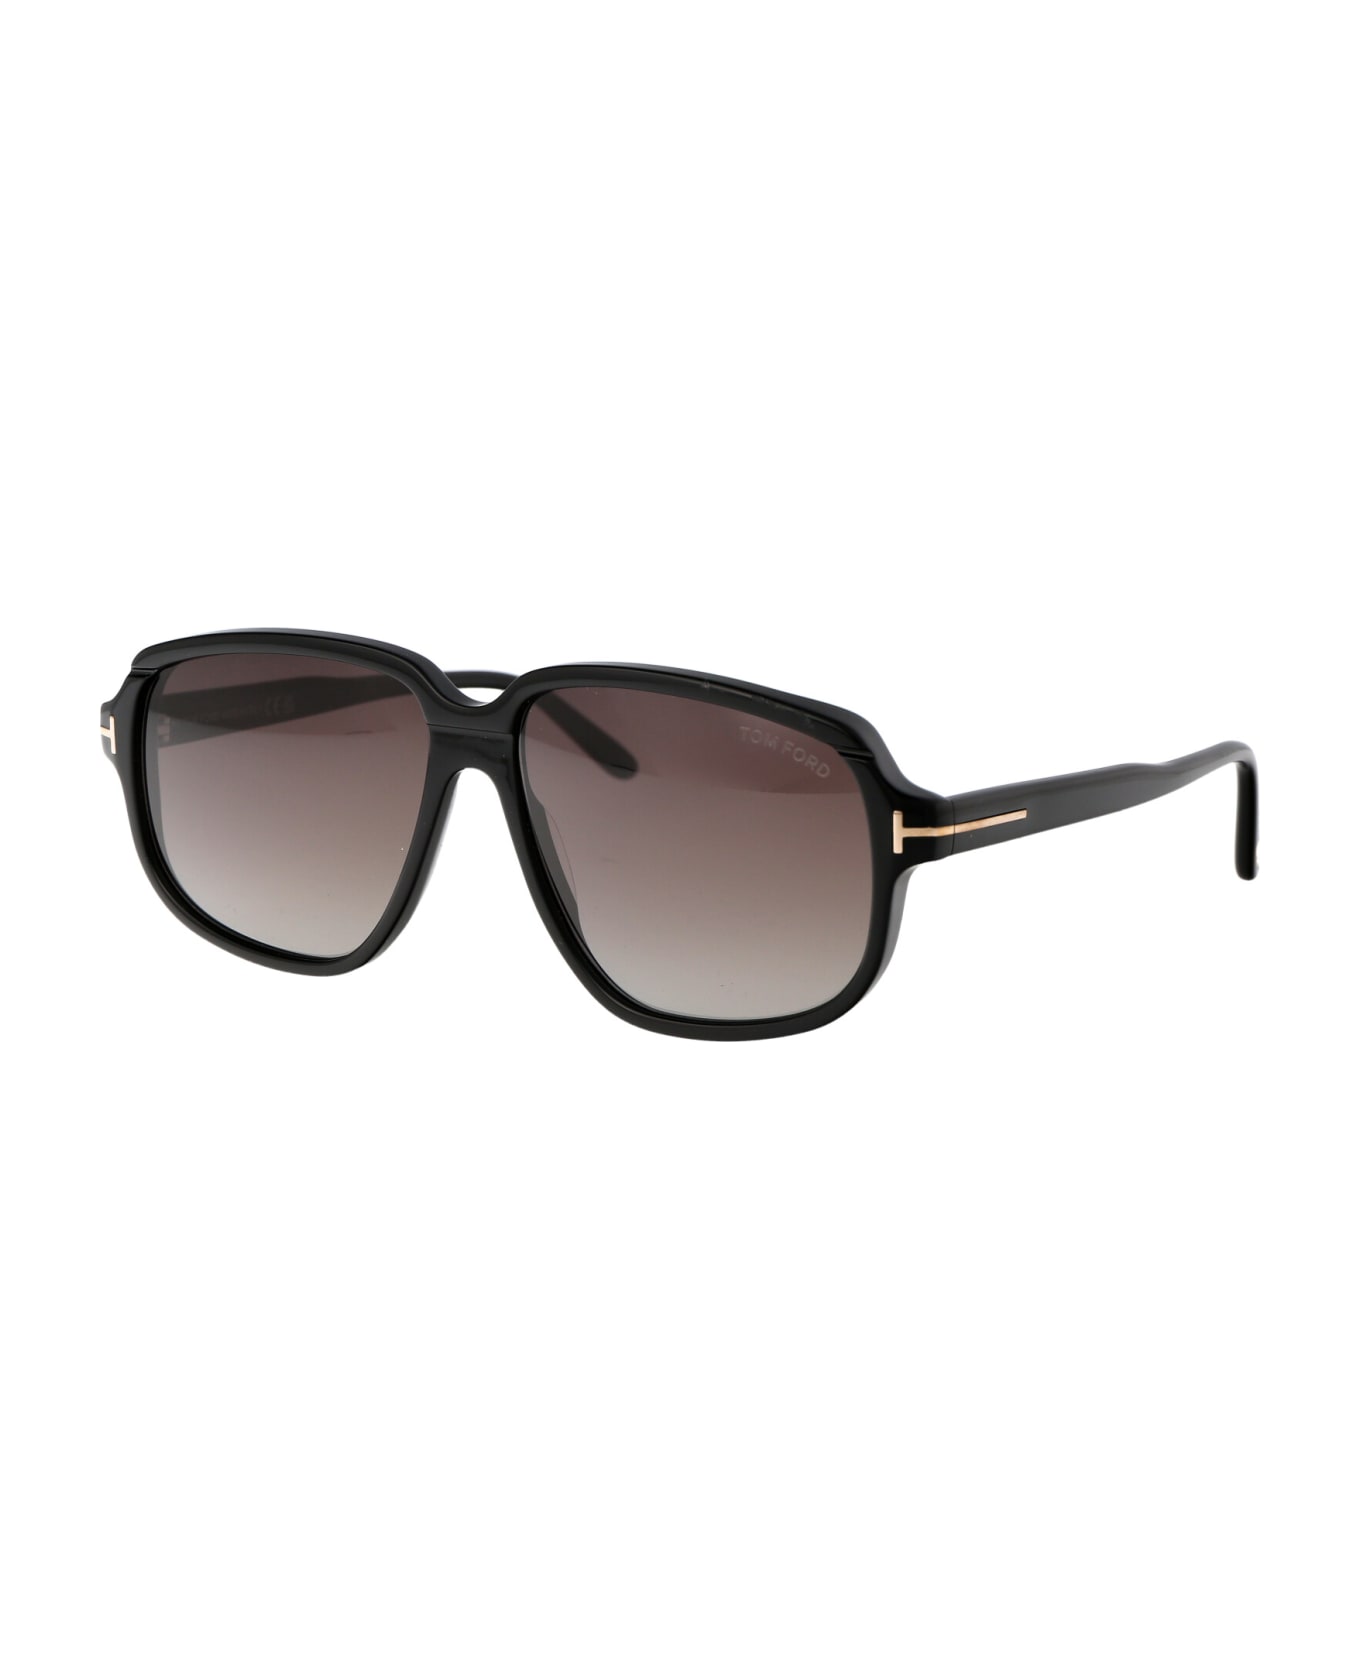 Tom Ford Eyewear Anton Sunglasses - 01B Nero Lucido / Fumo Grad サングラス